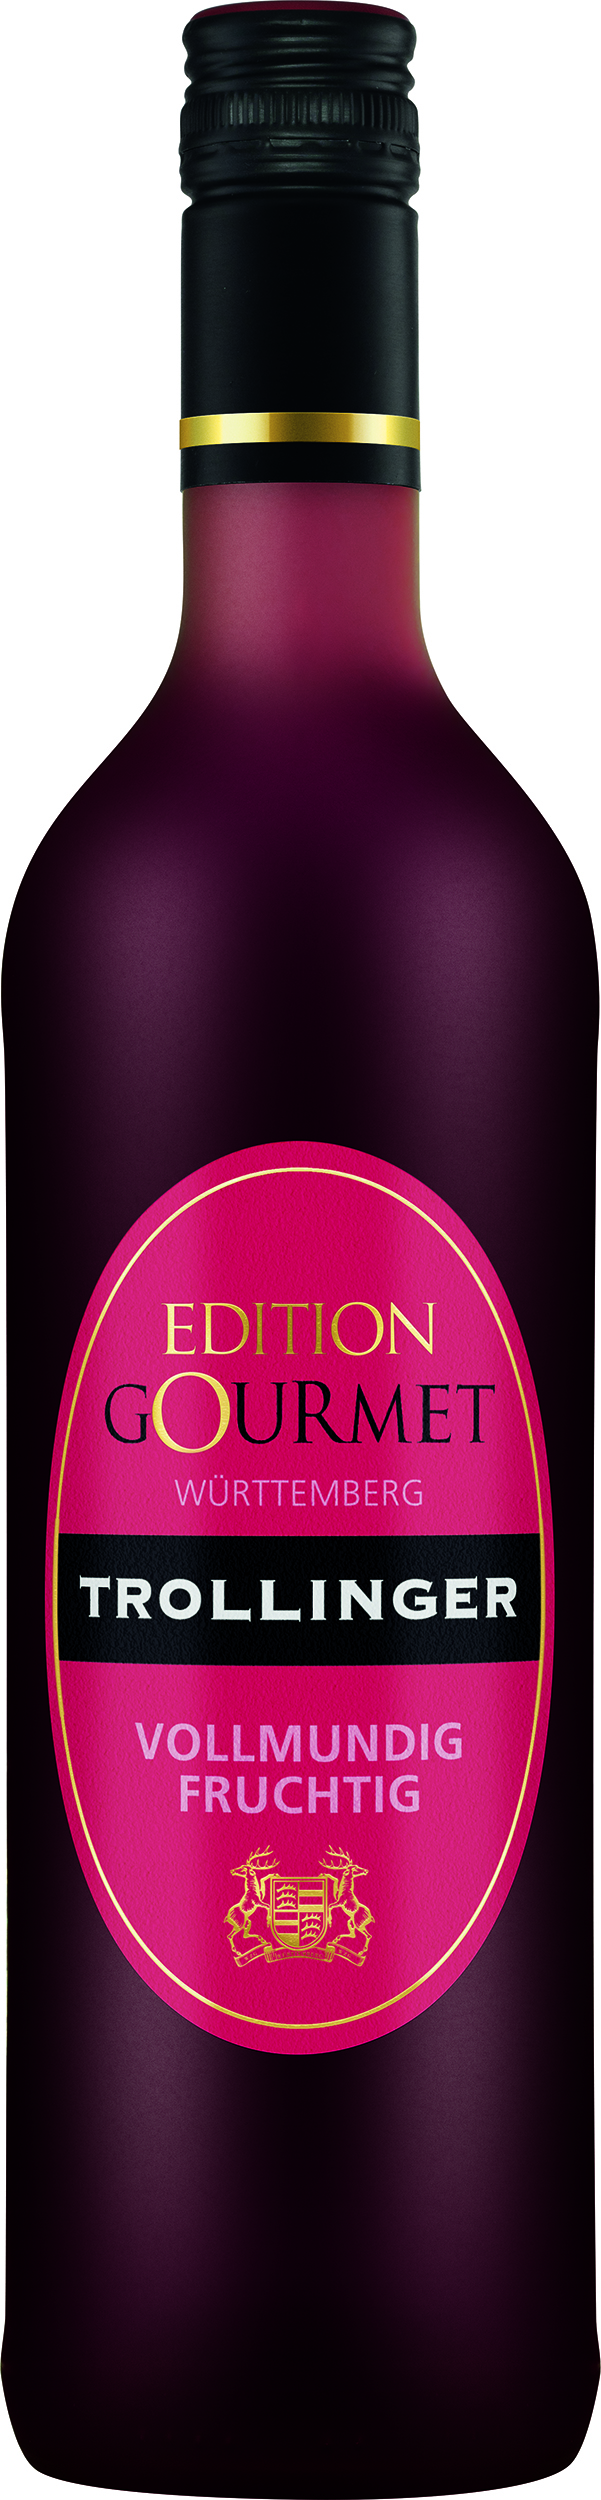 Edition Gourmet Trollinger Vollmundig Fruchtig 0,75 L - Rotwein, Württemberg, WZG